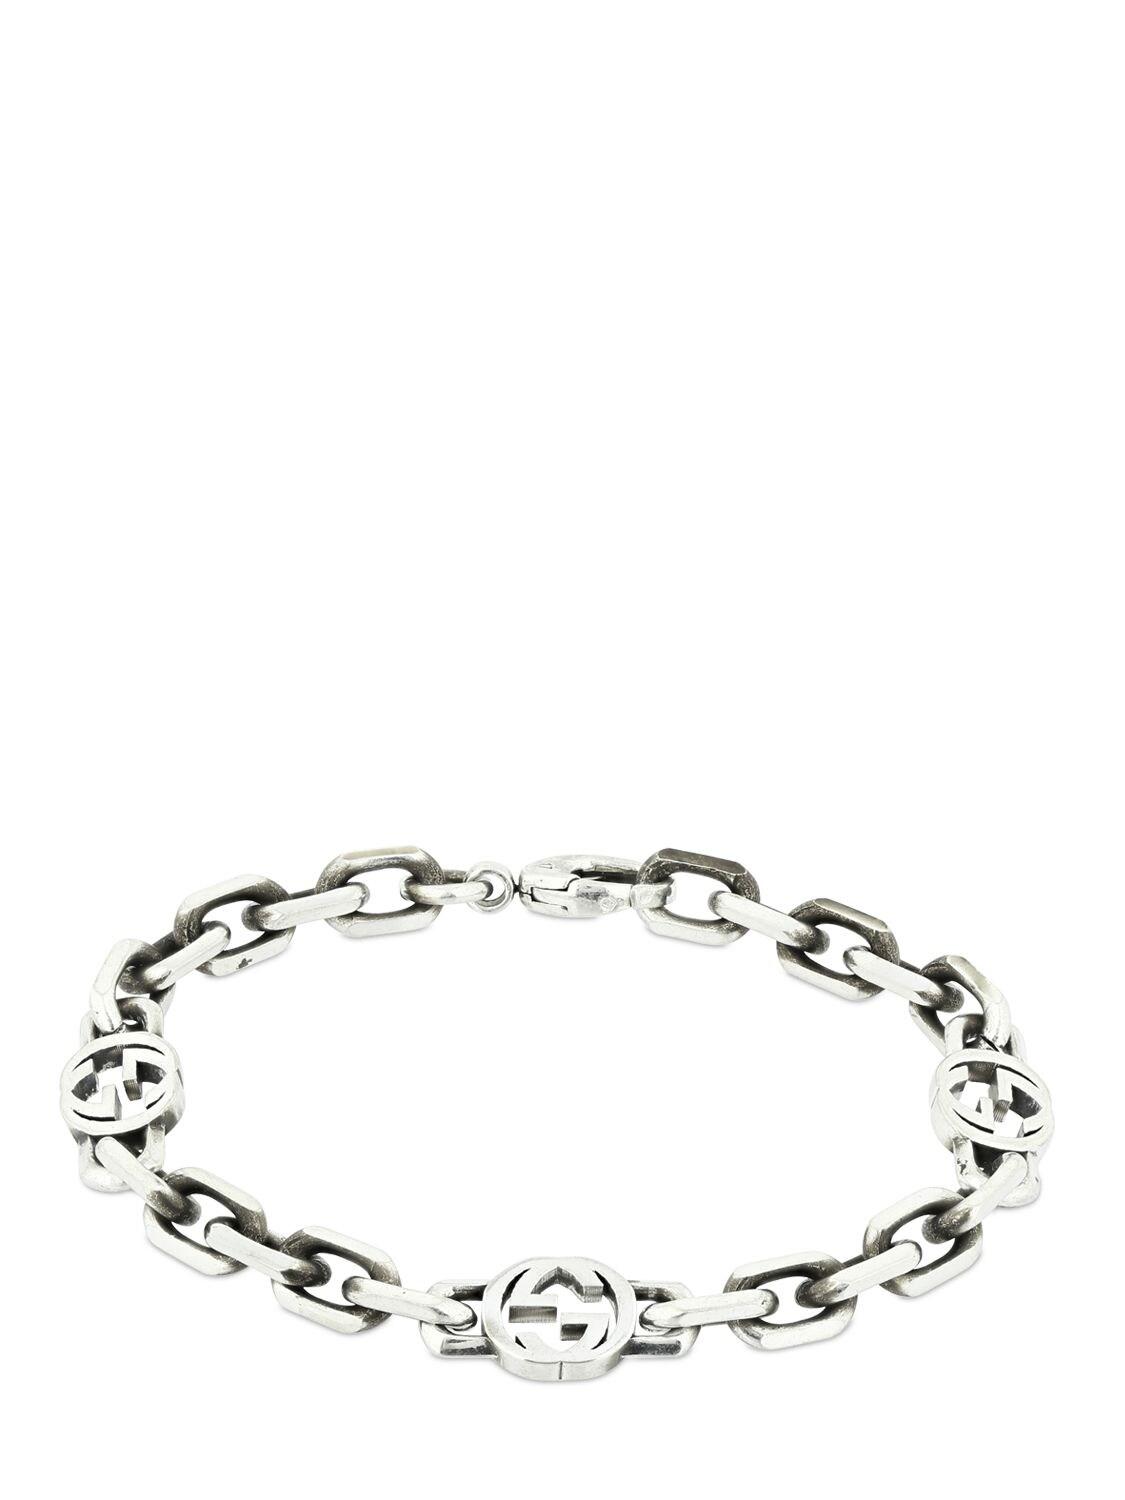 Gucci Interlocking G Bracelet in Silver (Metallic) - Lyst